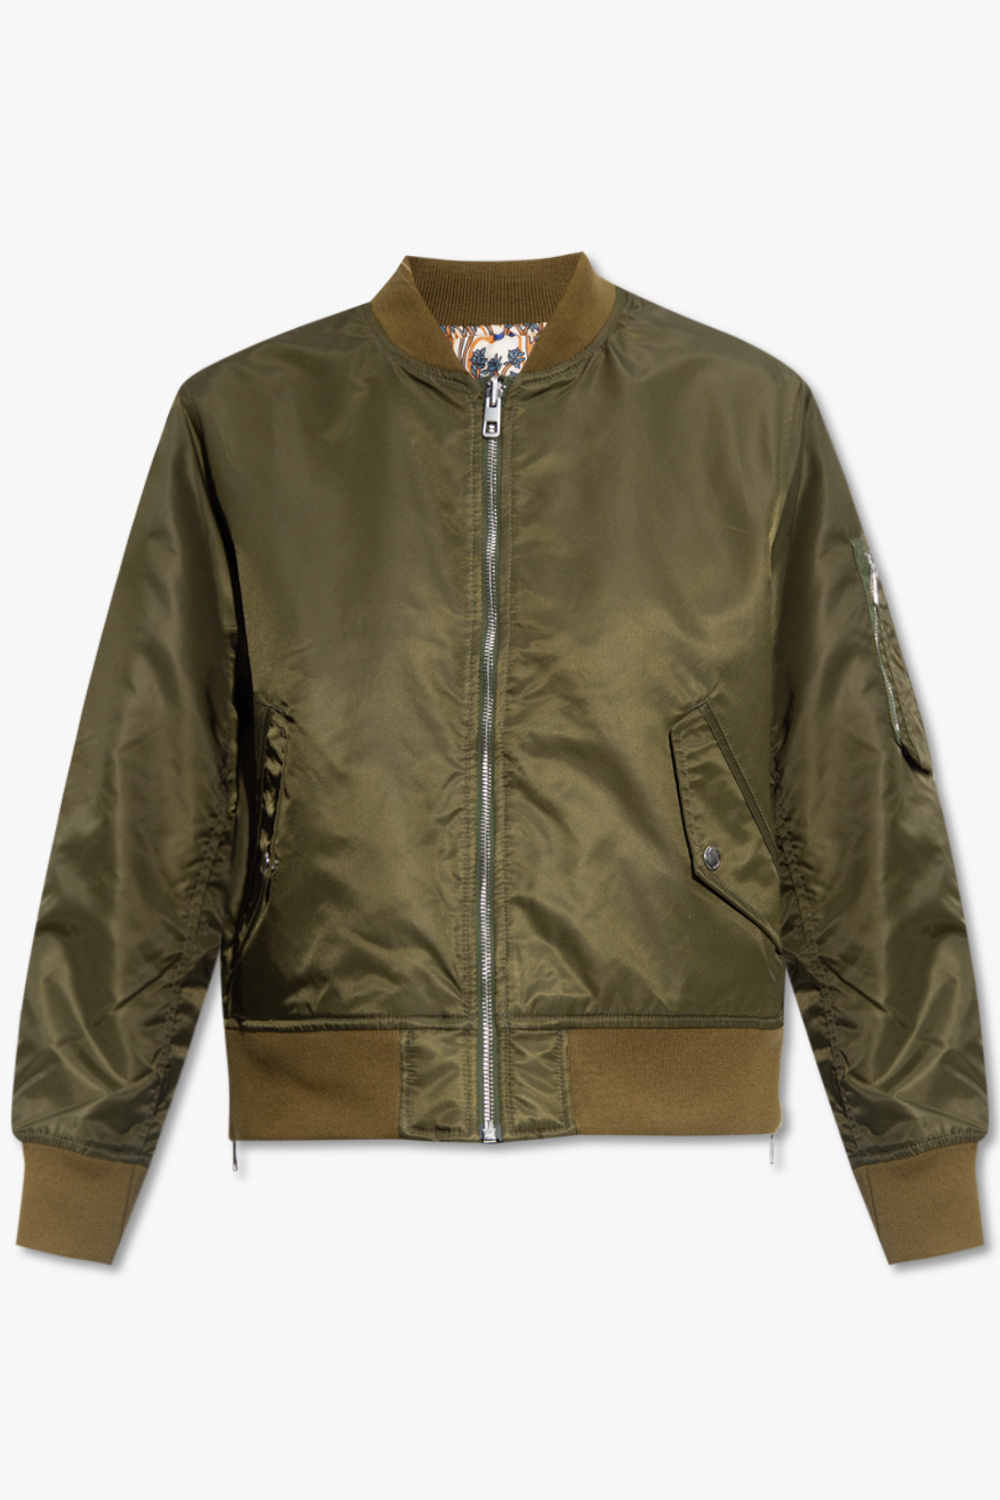 Louis Vuitton Padded Nylon Bomber Jacket Green Khaki. Size 36